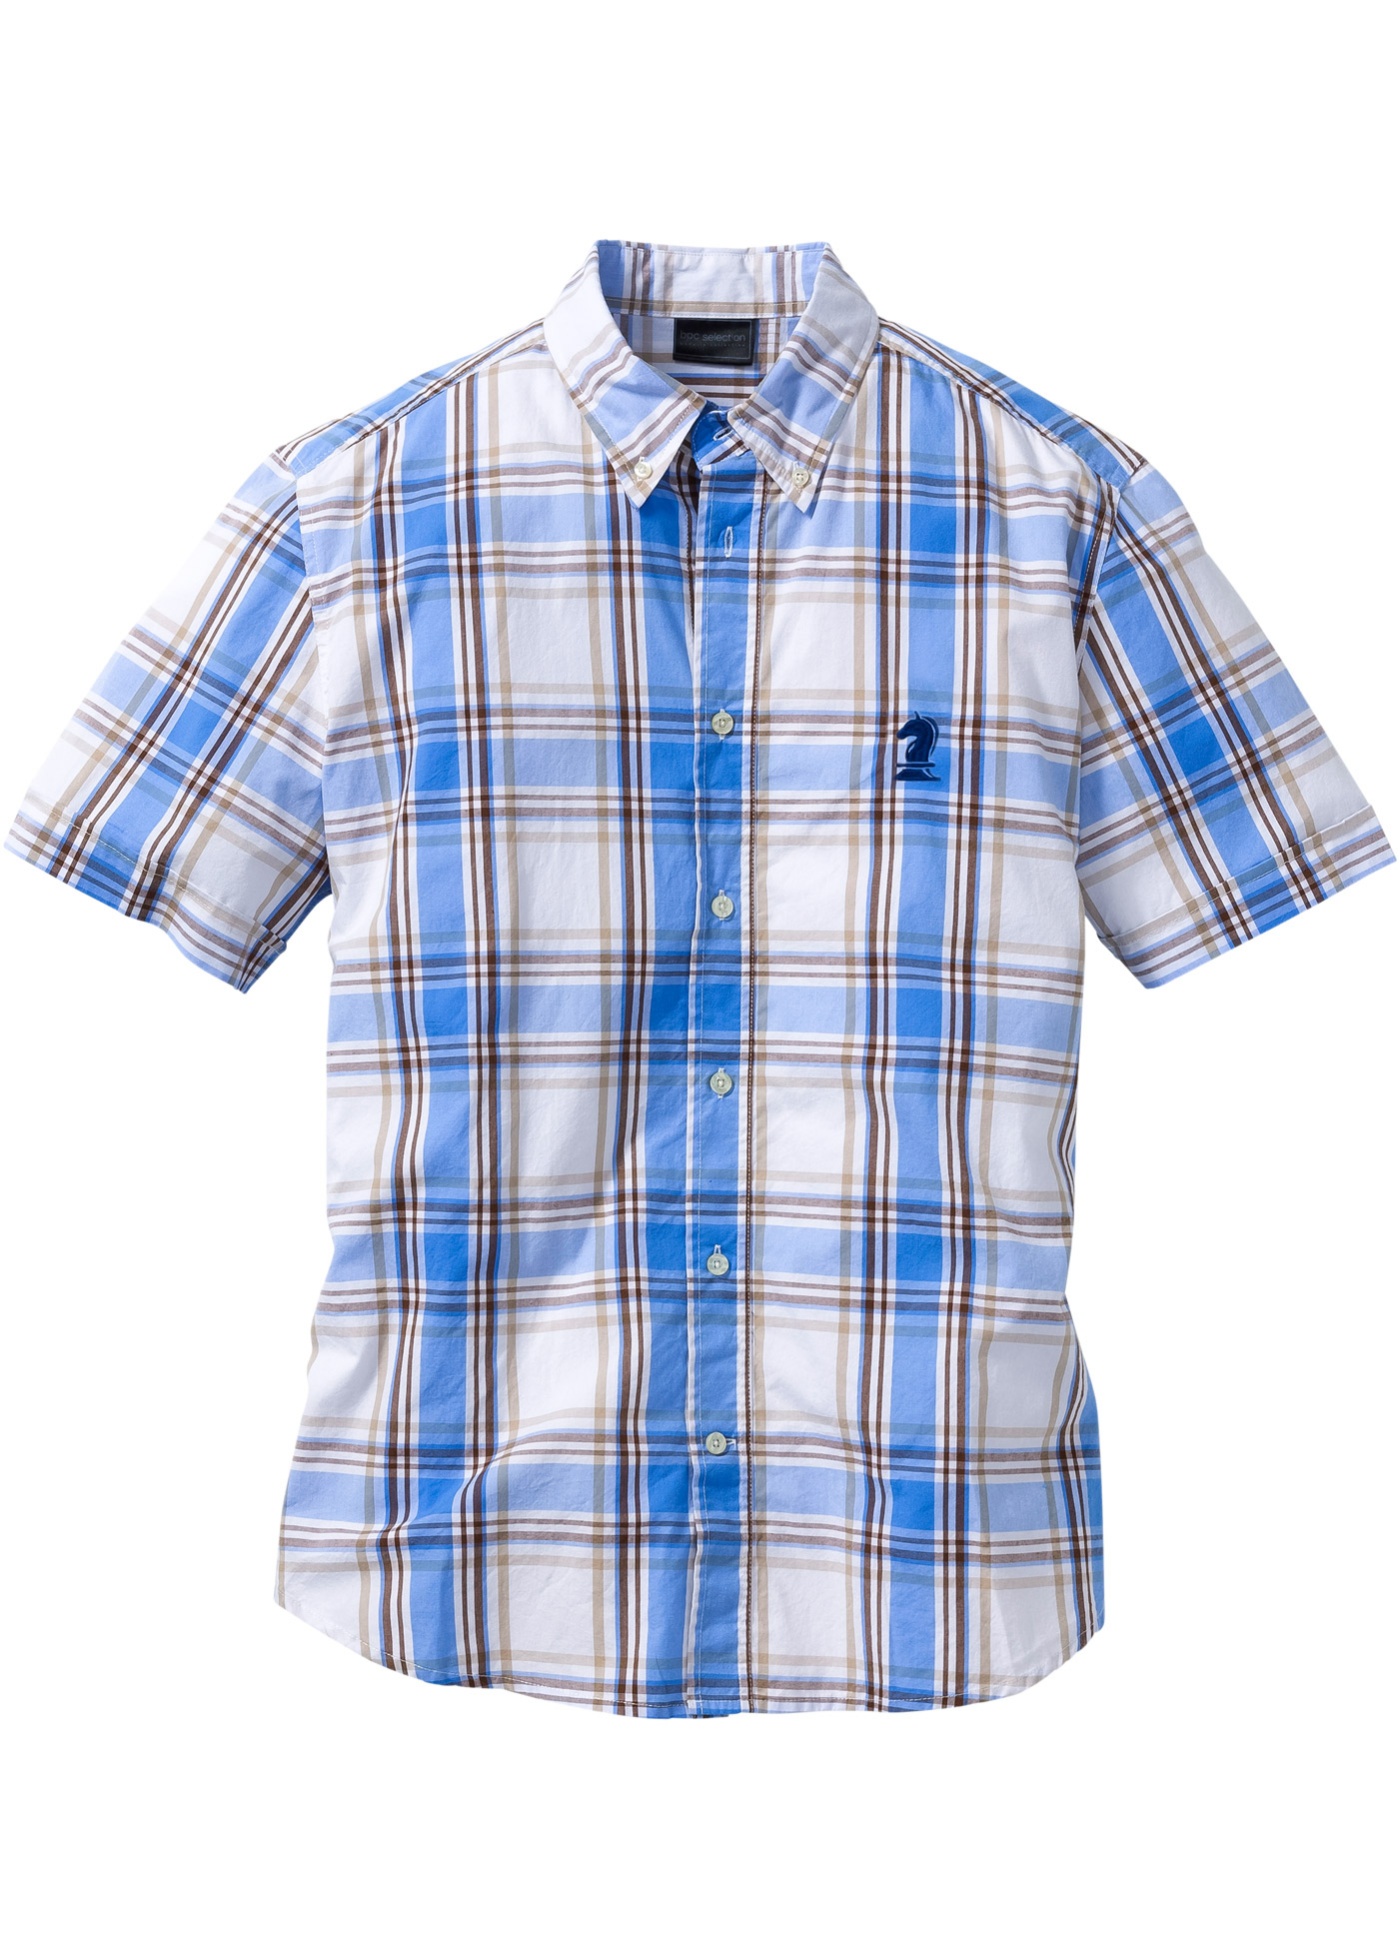 Rutig skjorta, bpc selection, mellanblå/vit, rutig